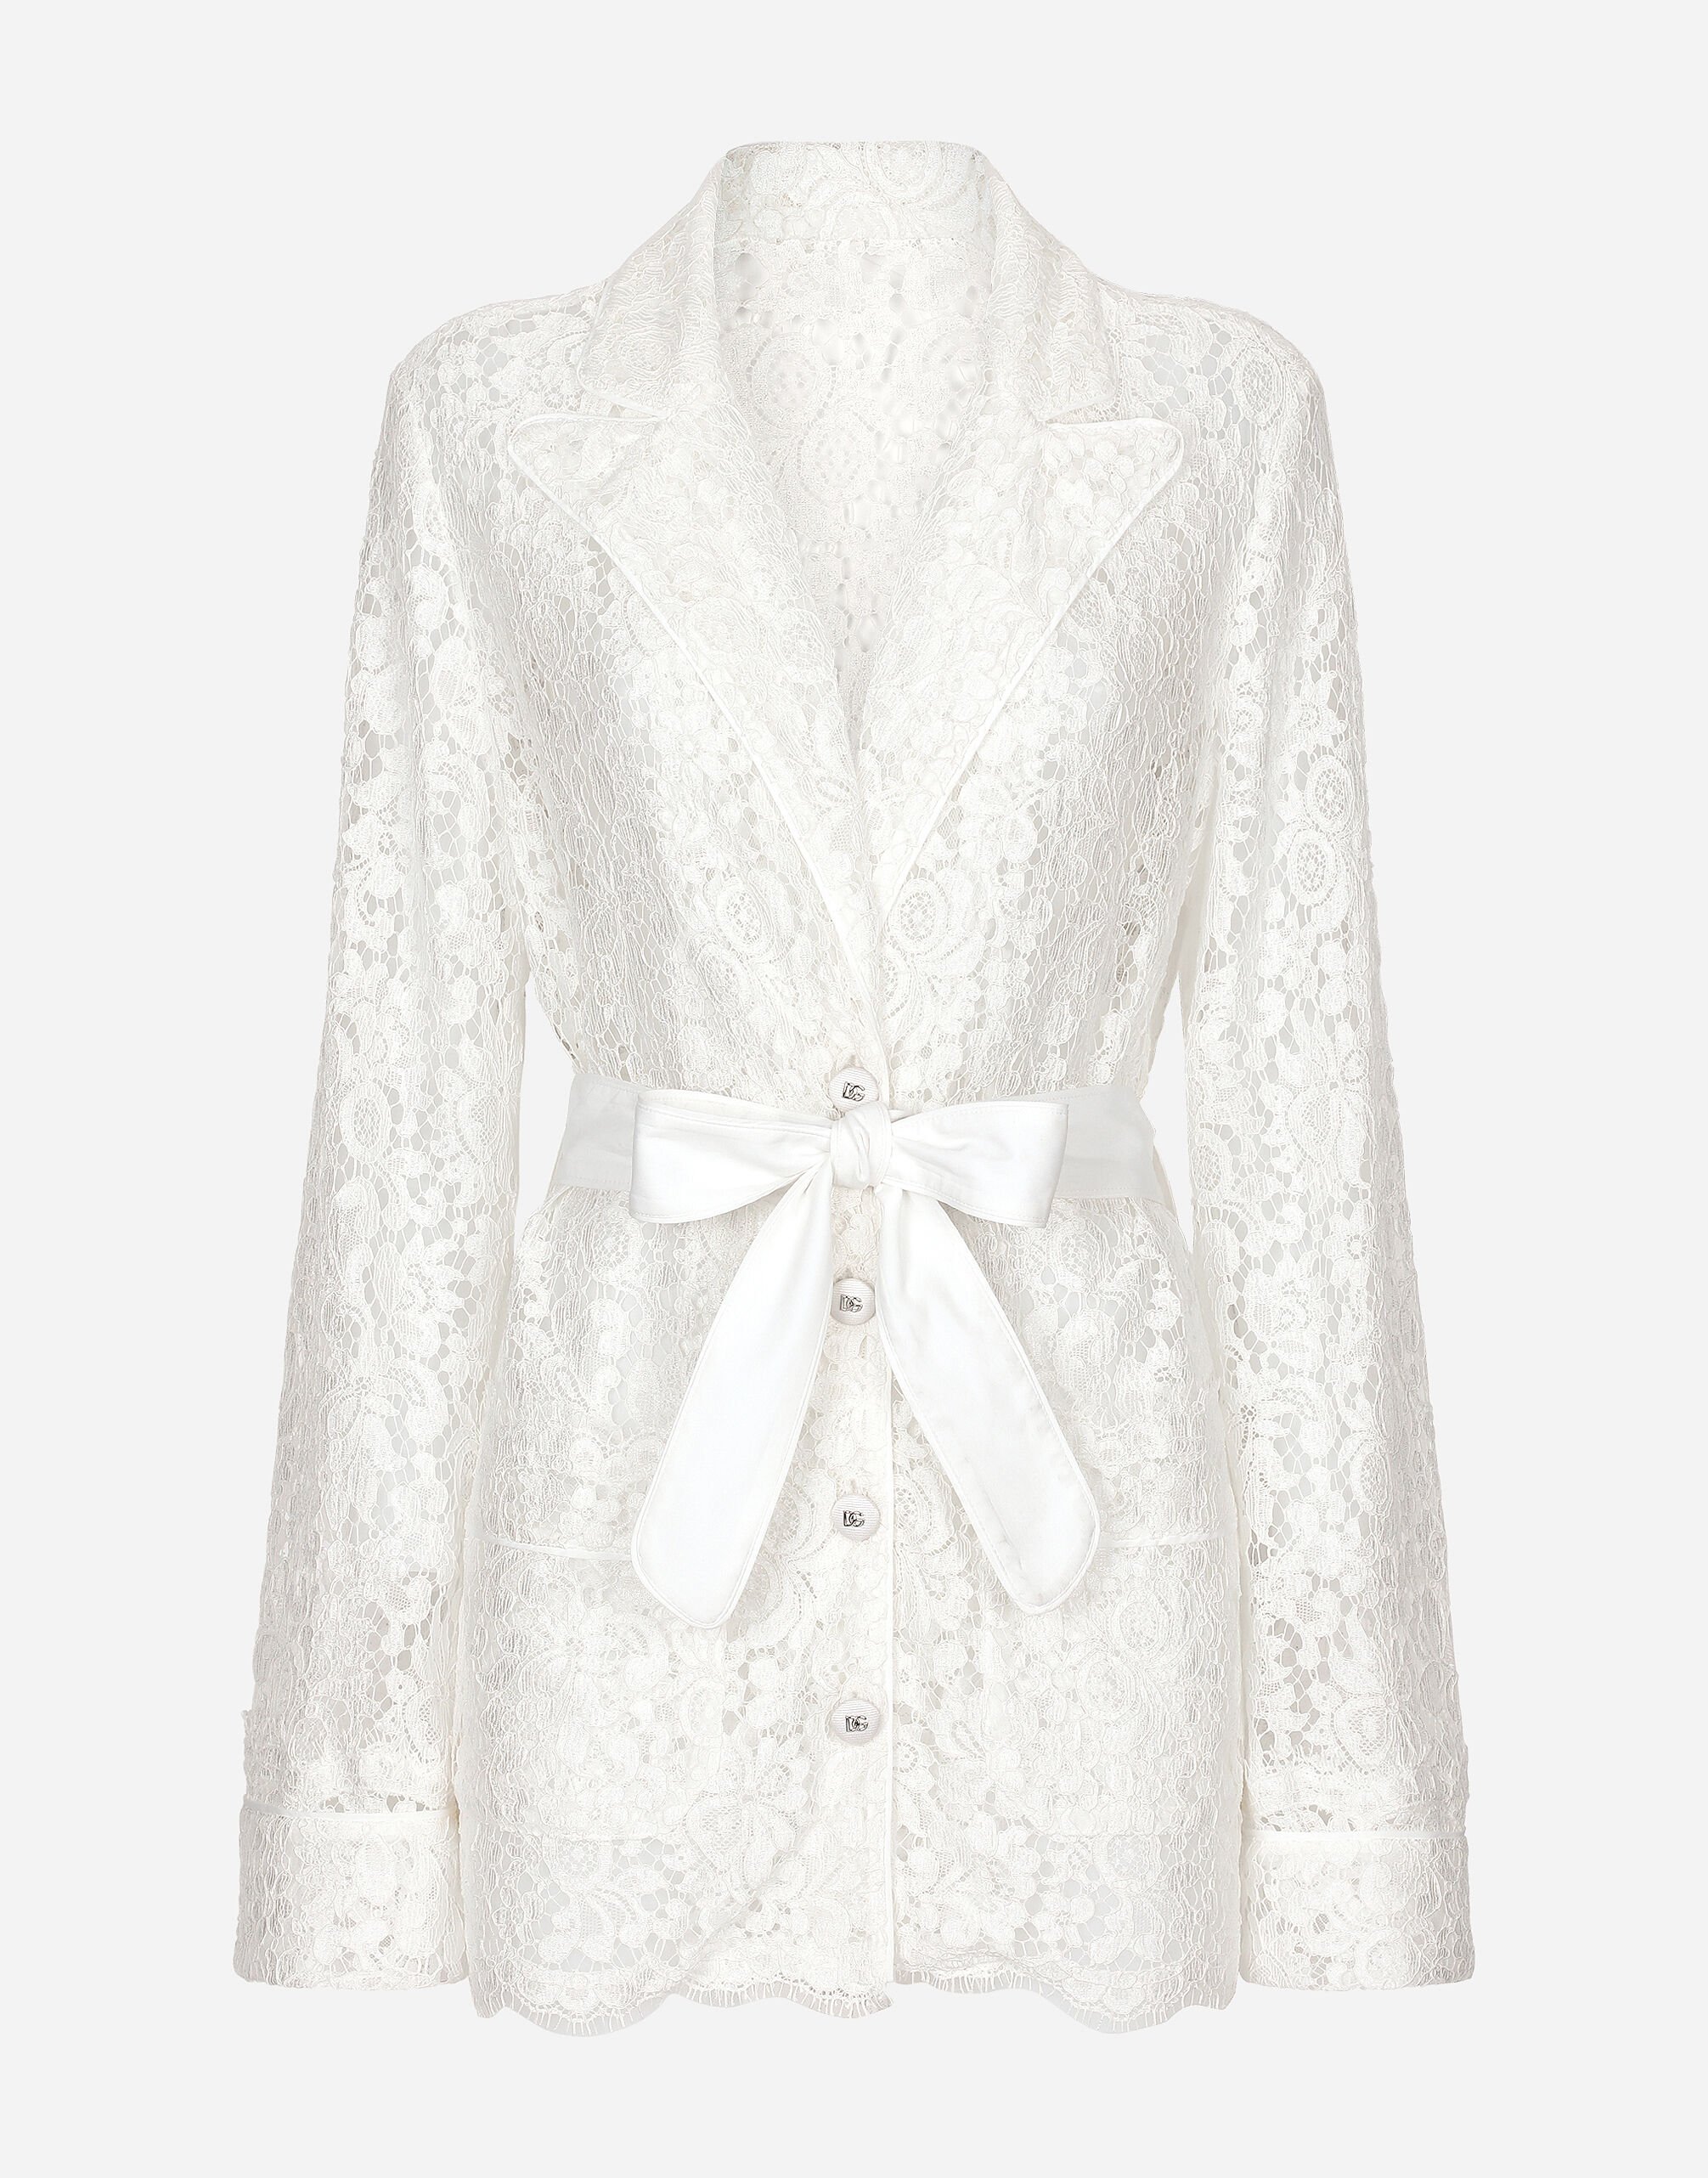 Dolce & Gabbana Camisa pijama de encaje cordonetto floral Estampado F755RTHS5Q0